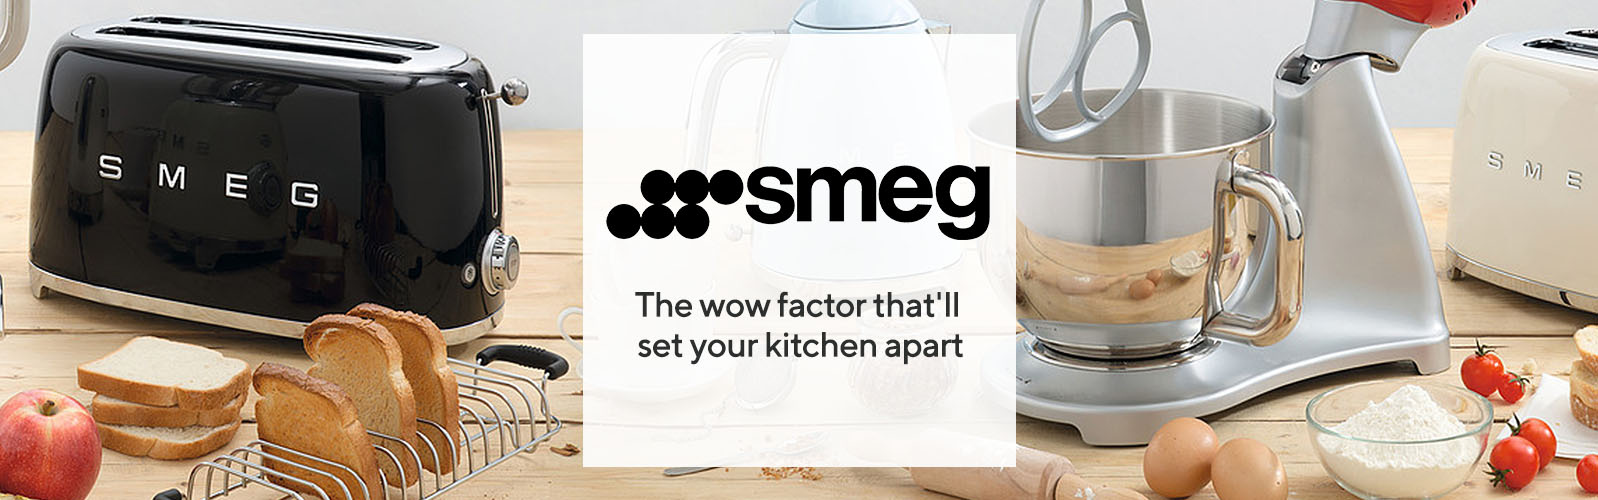 Smeg  The wow factor that'll set your kitchen apart